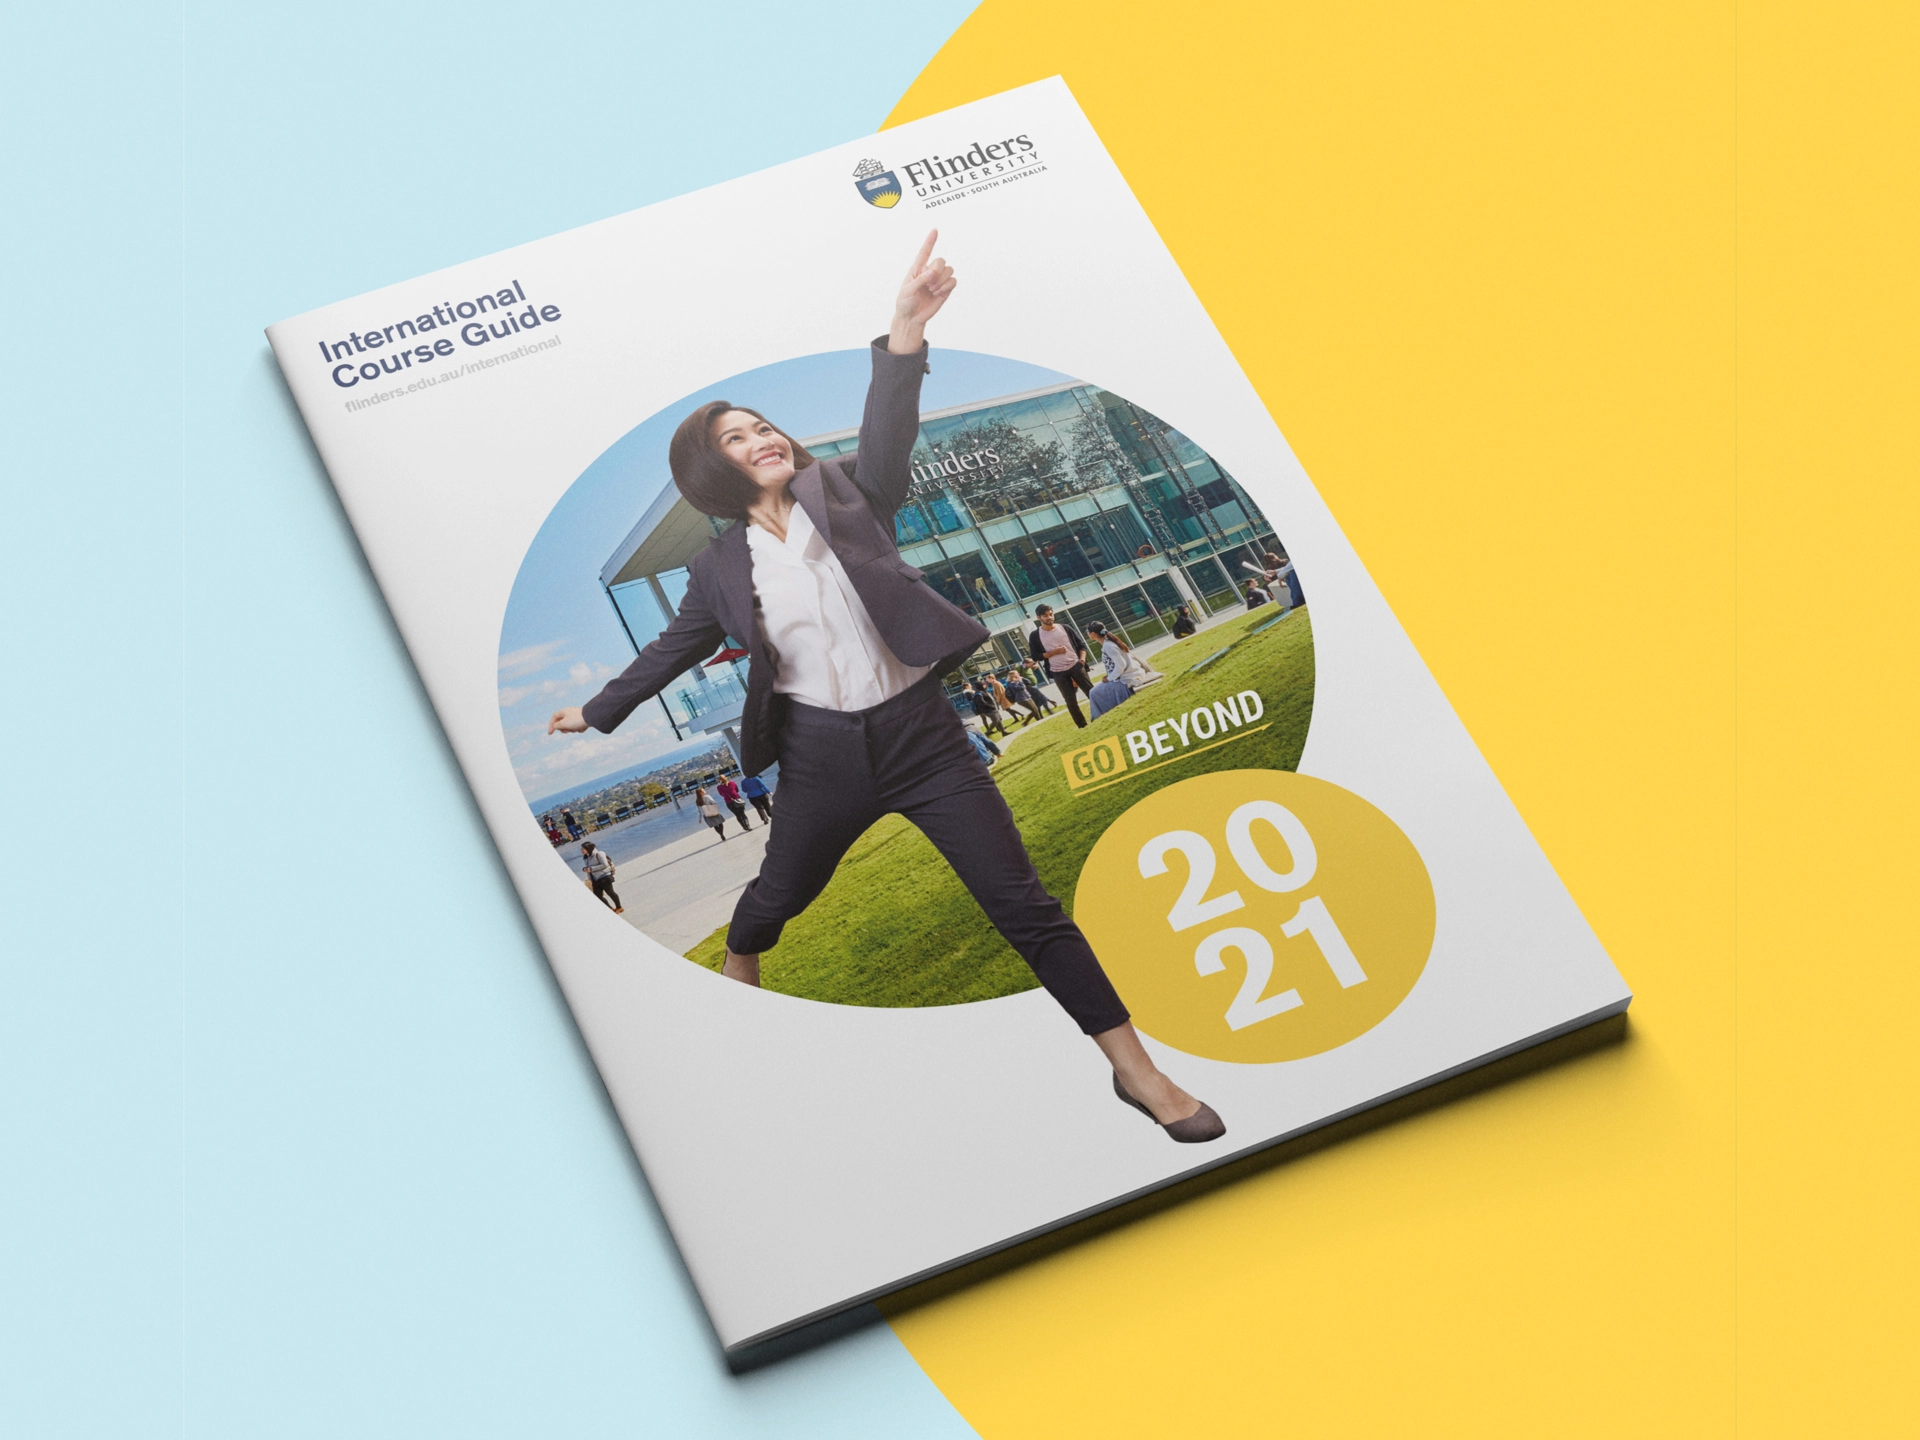 Flinders University International Course Guide cover design